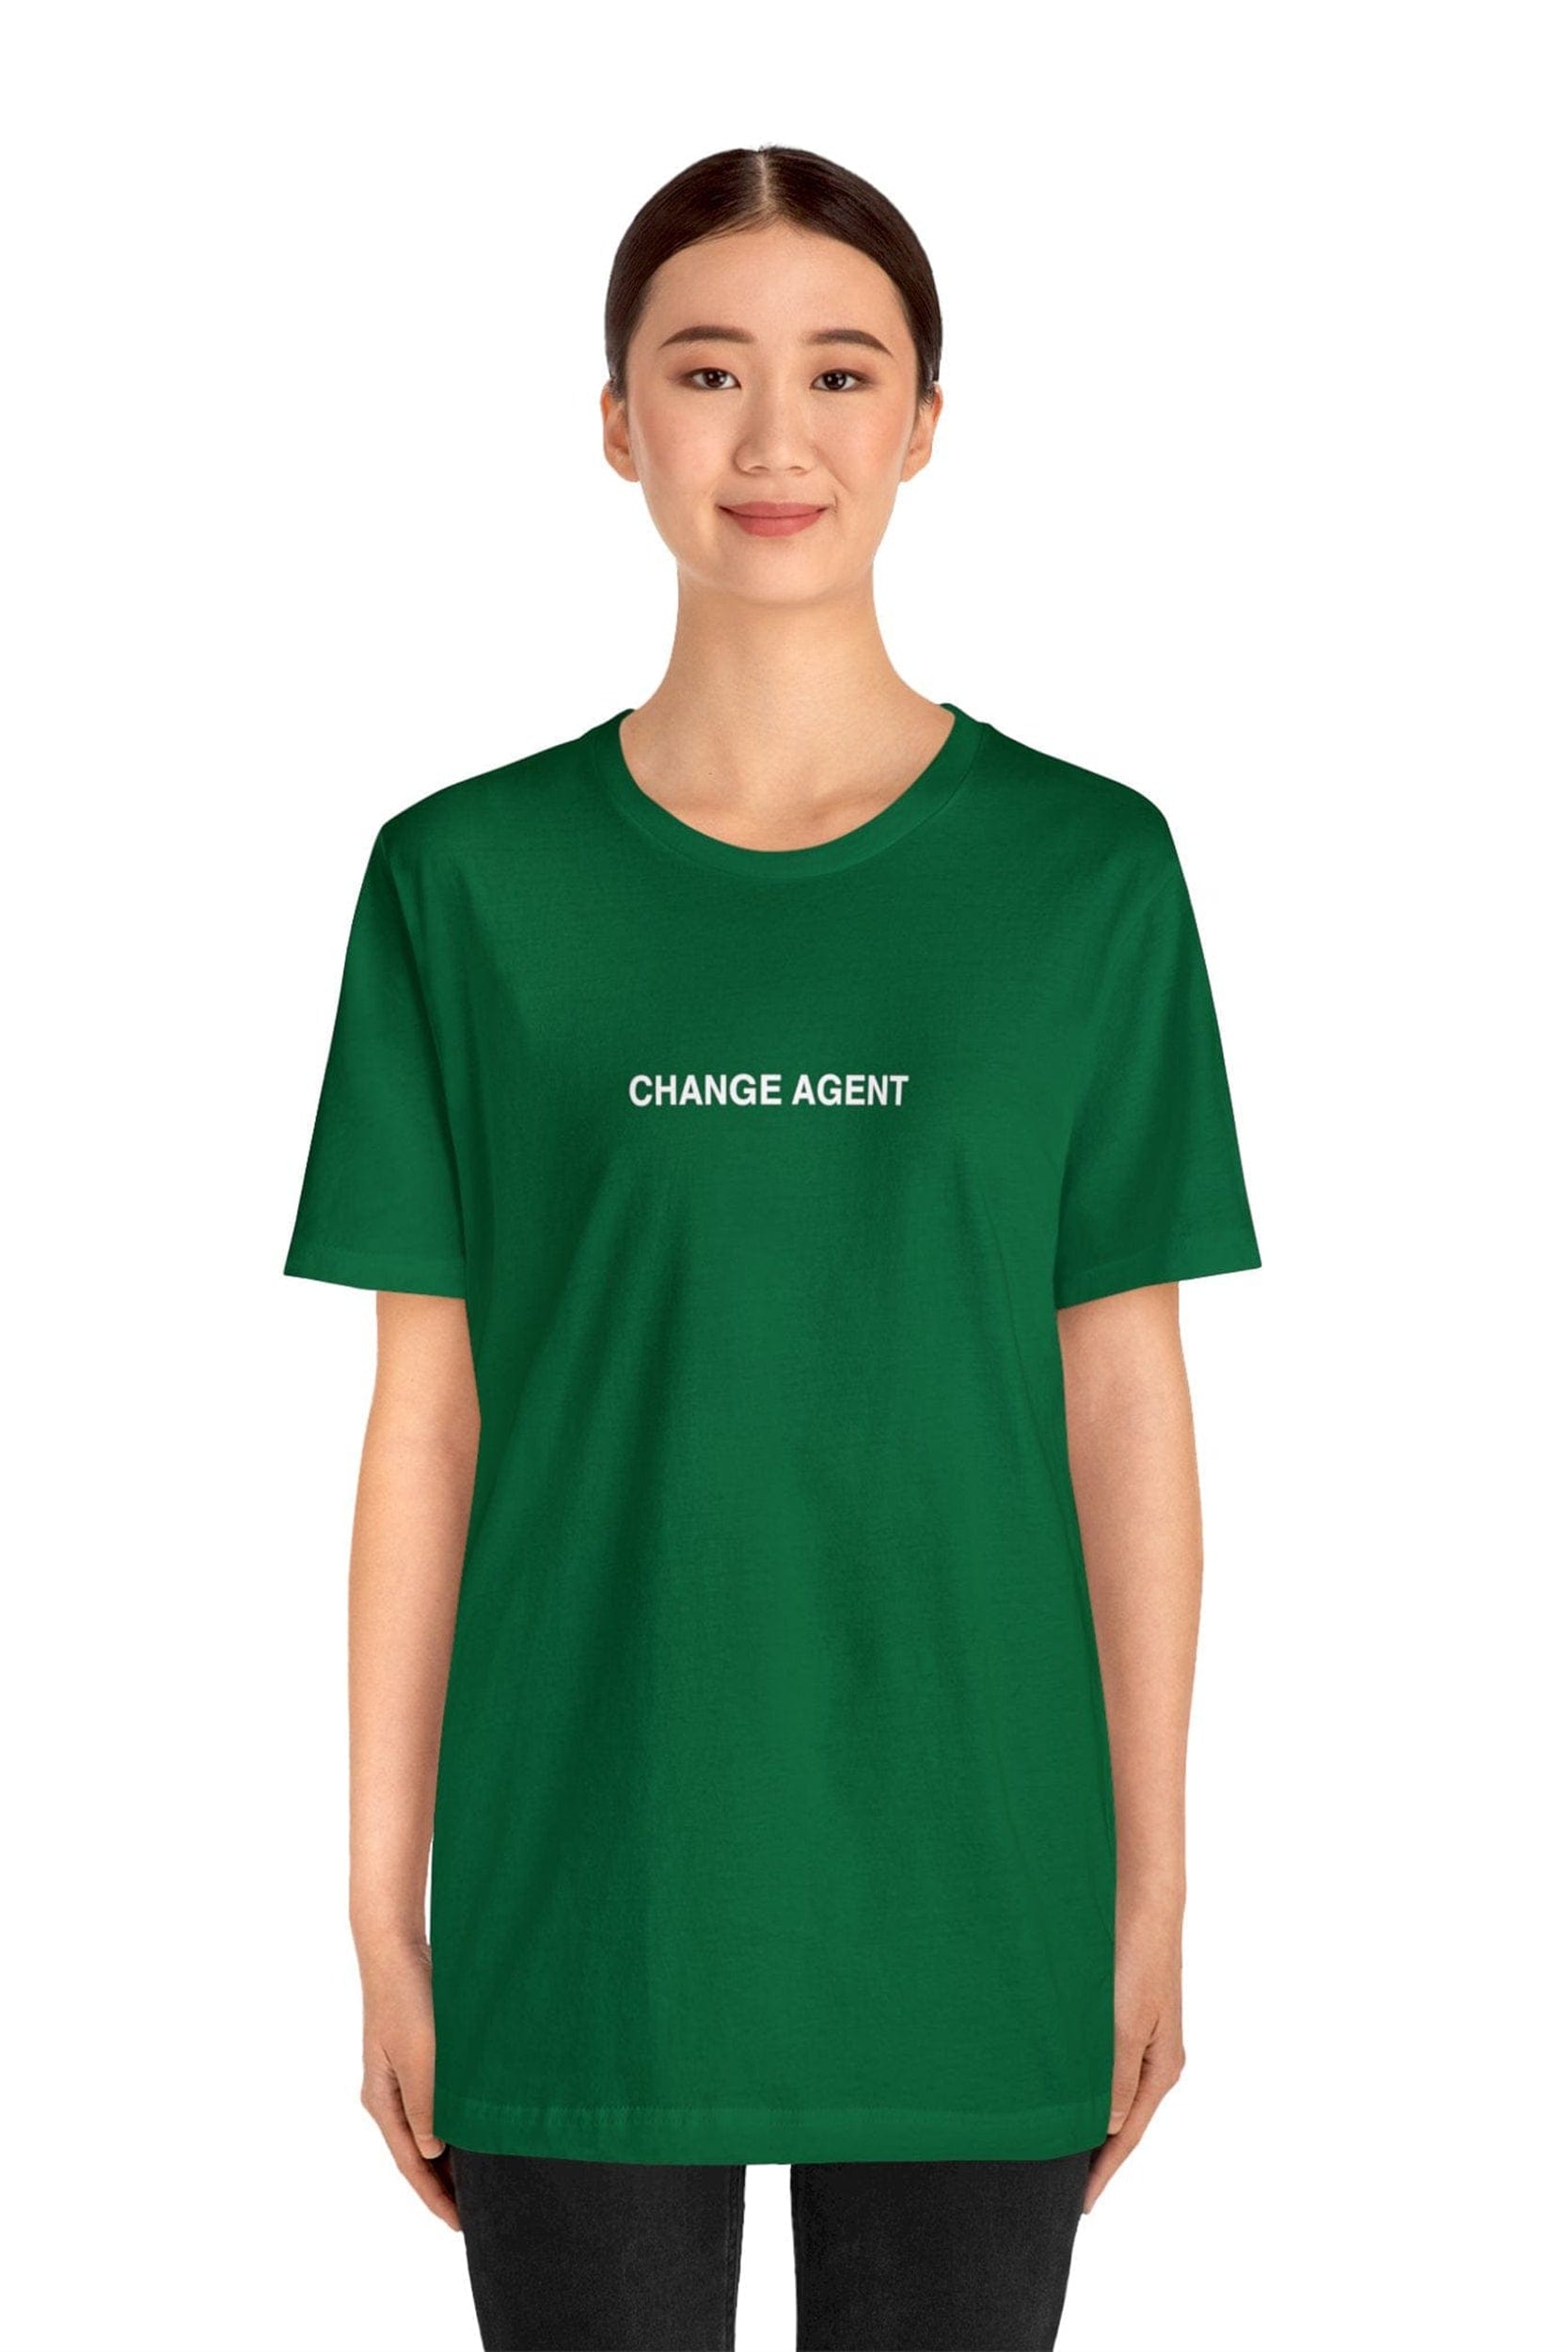 "CHANGE AGENT" T-Shirt